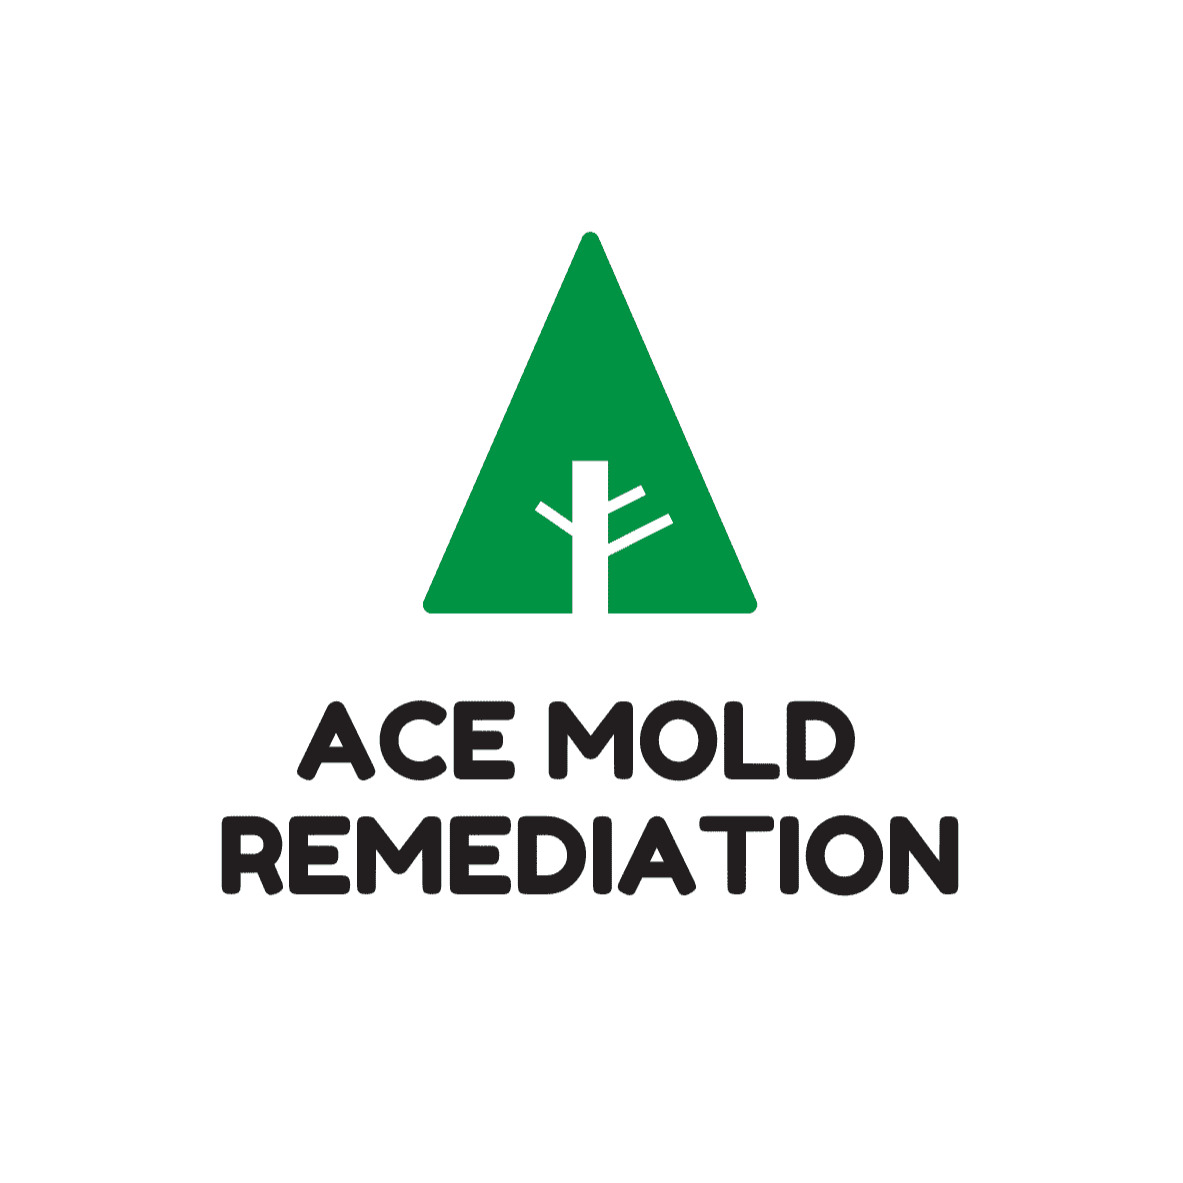 Ace Mold Remediation